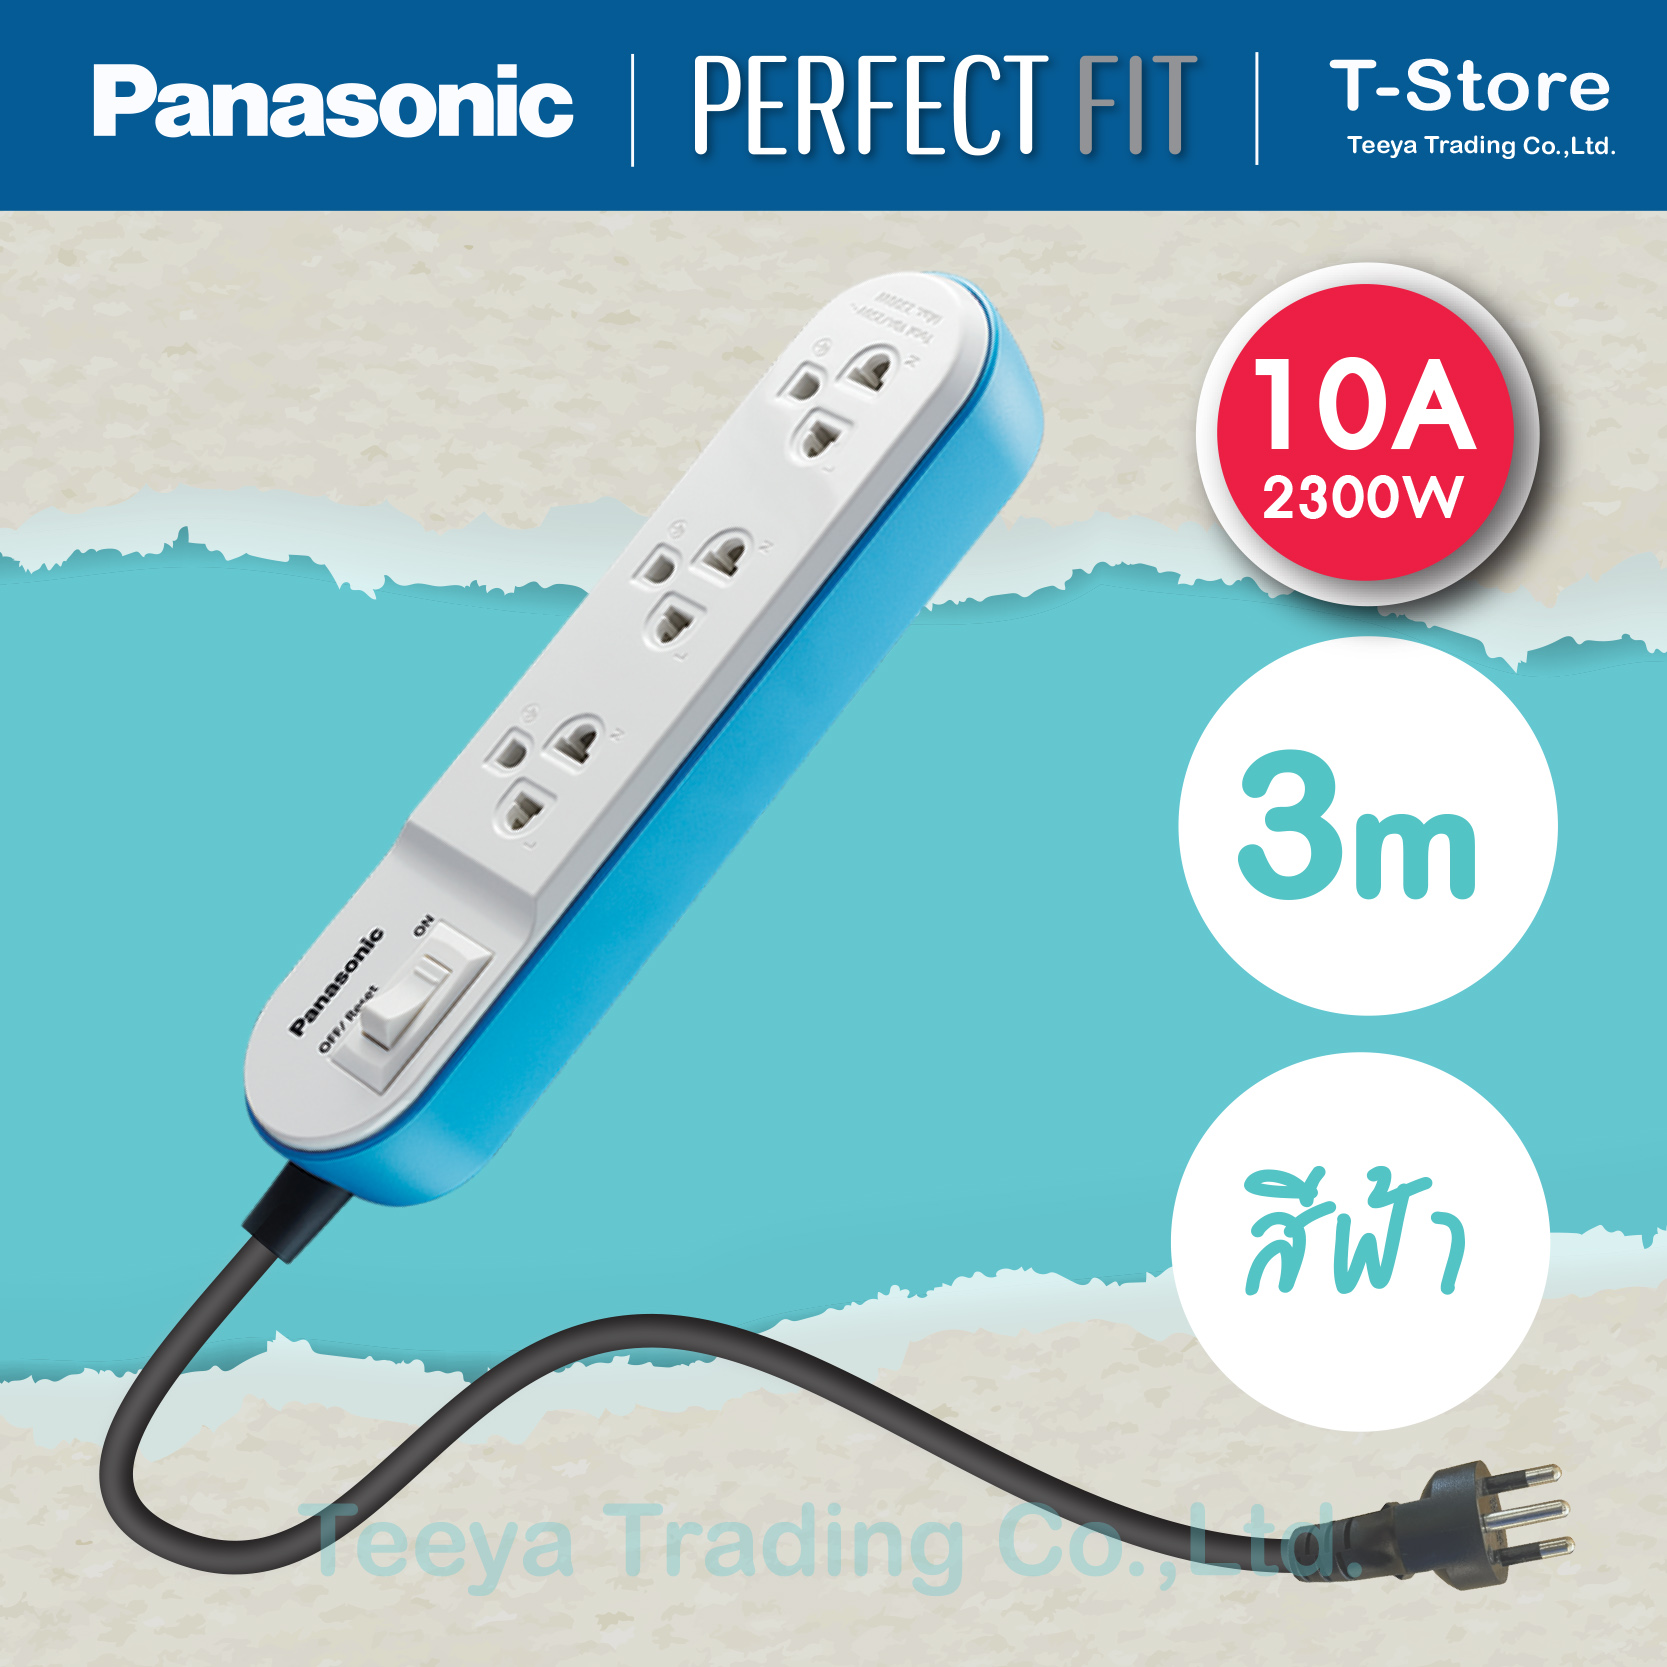 Panasonic Perfect FIT  รุ่น WCHG 24332 ปลั๊กพ่วง 3 เต้ารับ 1 สวิตช์คุมเมน 10A 2300W   สายยาว 3 M